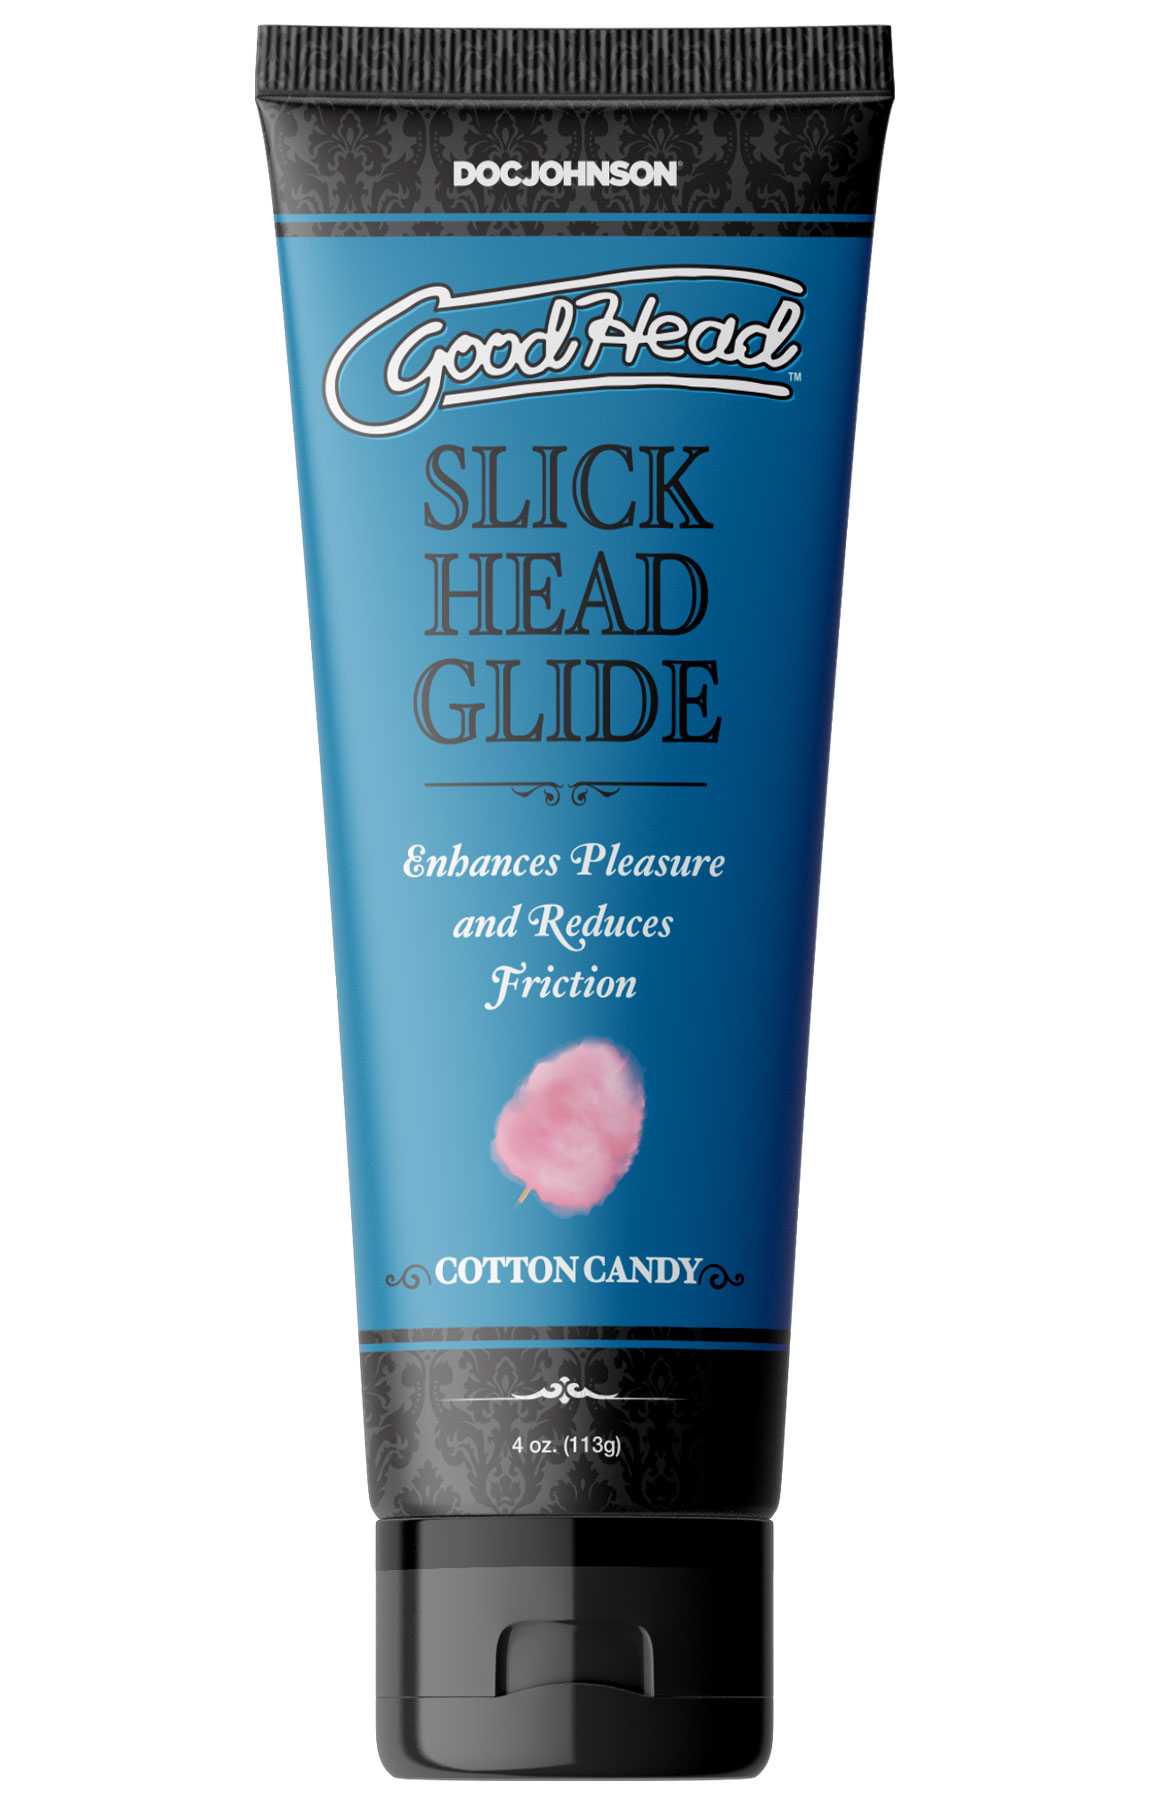 goodhead slick head glide cotton candy  oz. 